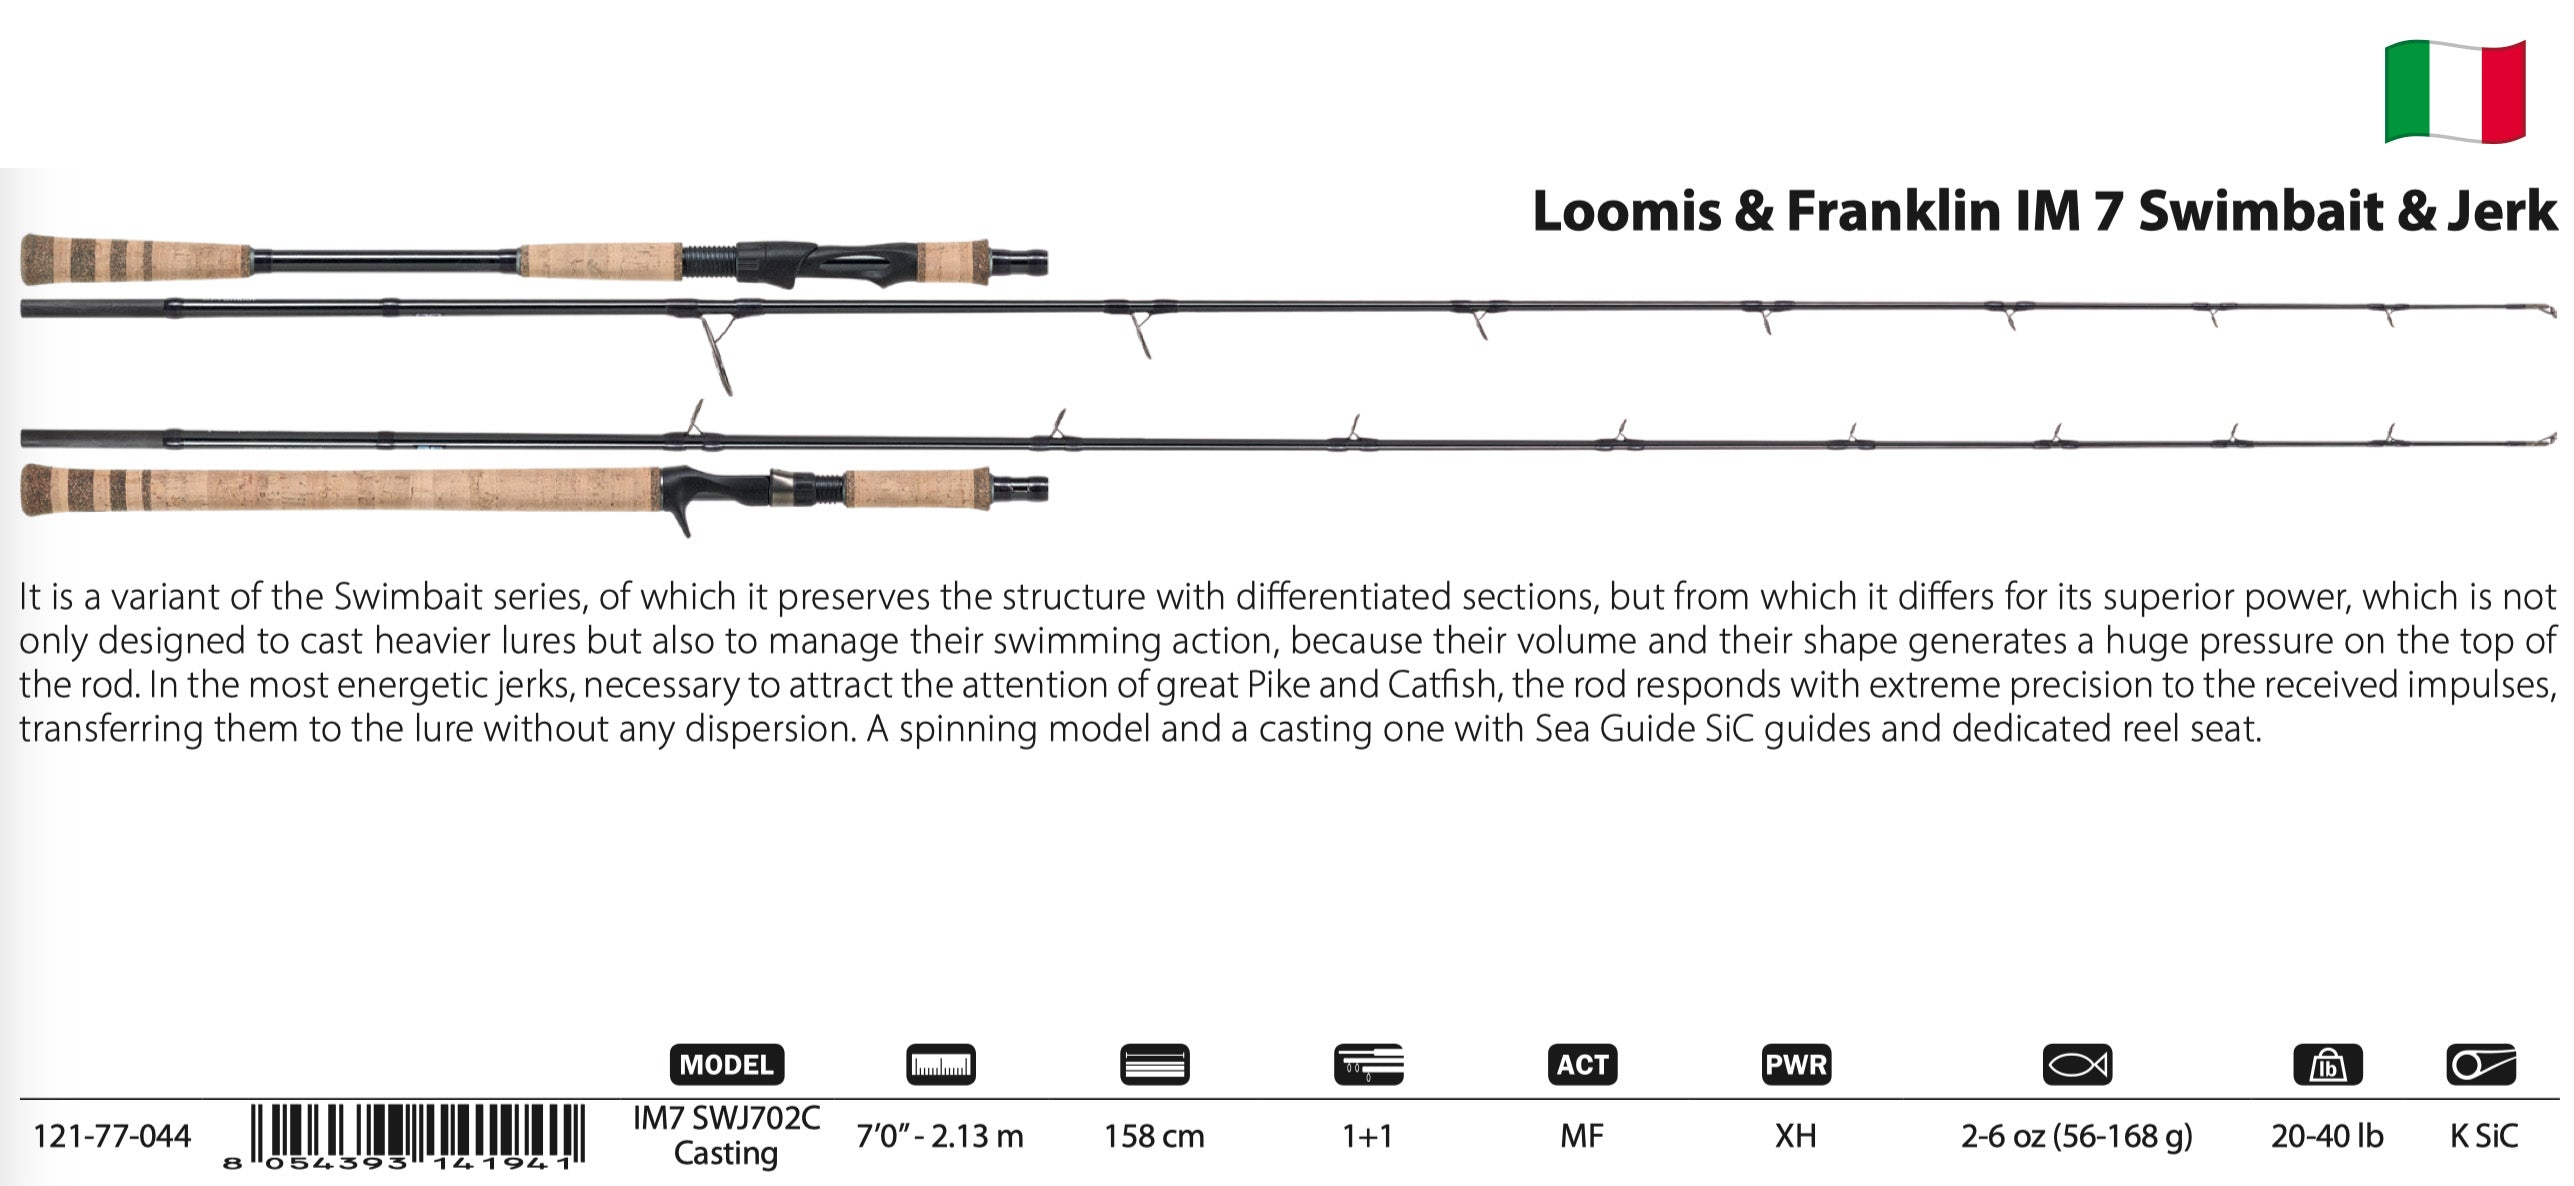 Loomis & Franklin IM 7 Swimbait & Jerk 7' 2-6 oz. Baitcasting Rod